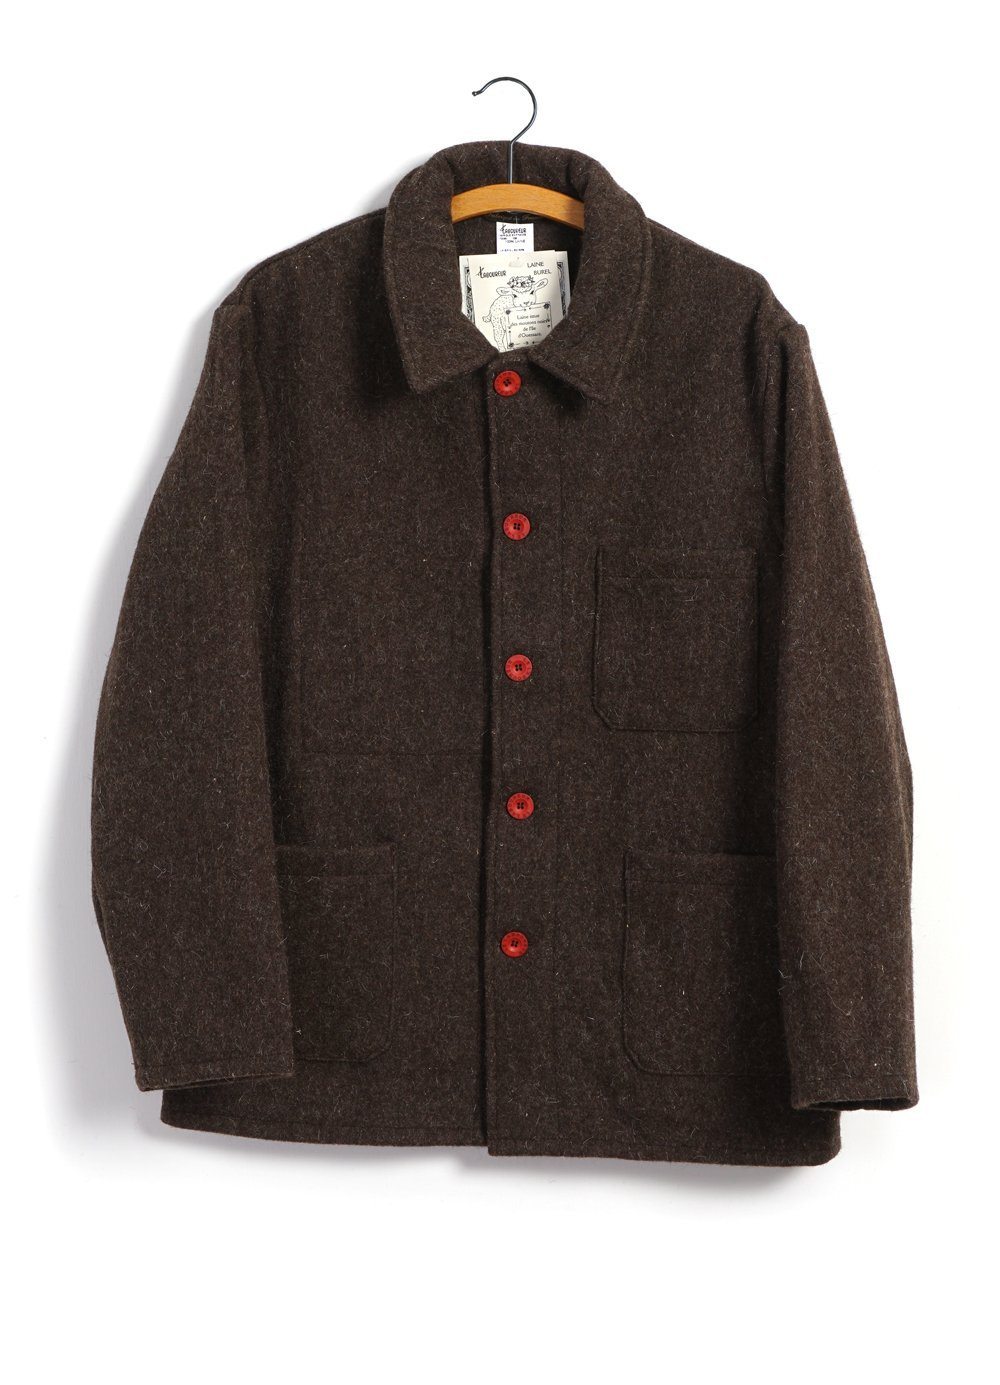 LE LABOUREUR - WORK JACKET | Wool | Brown - HANSEN Garments